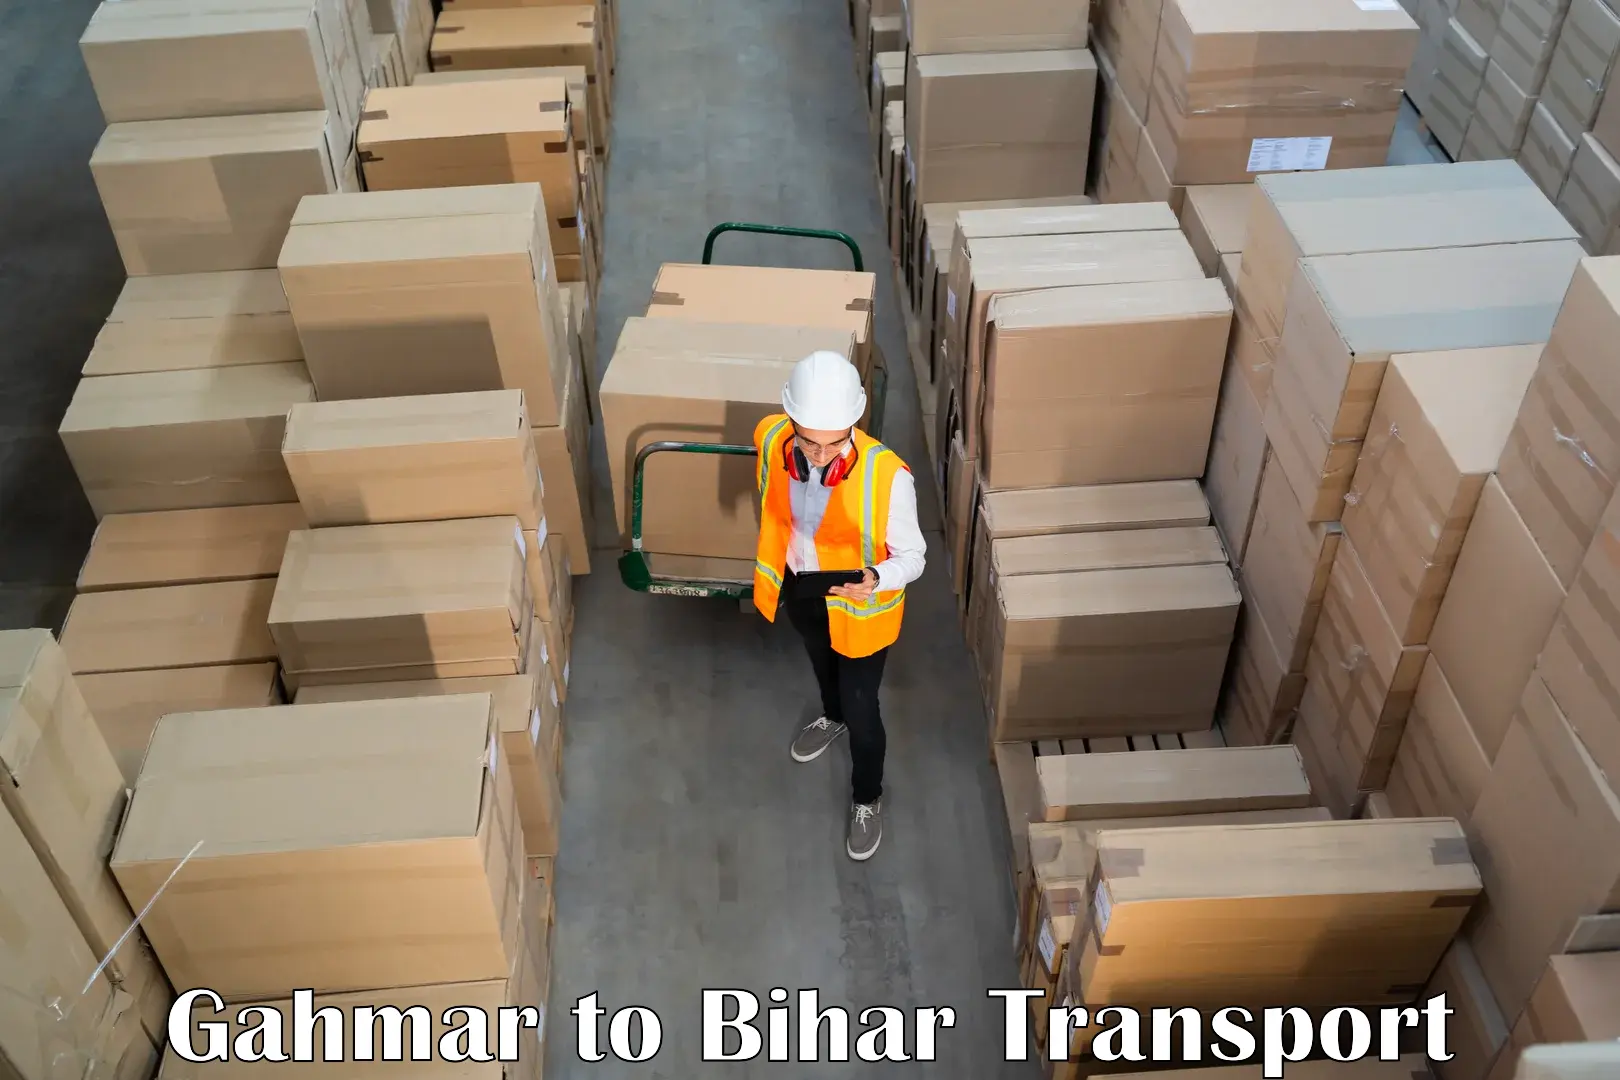 Daily transport service Gahmar to Bihar